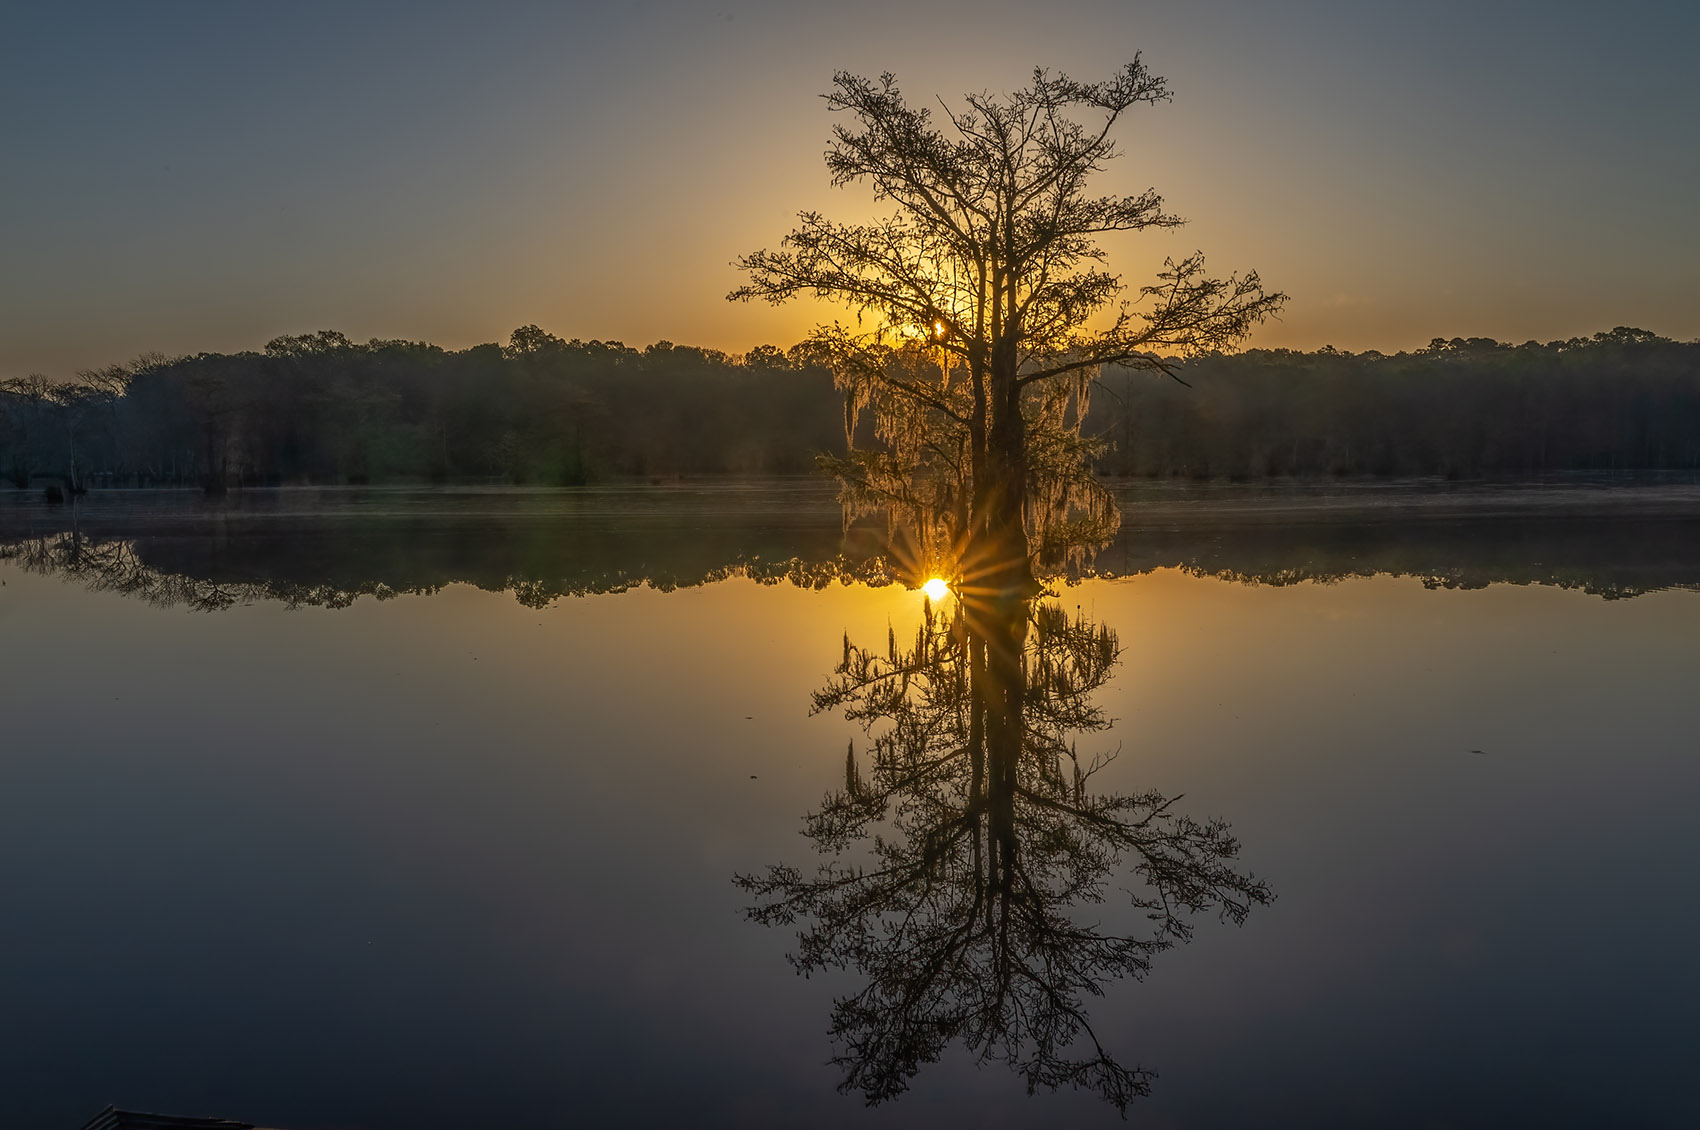 sunrise reflection in lake through cypress tree